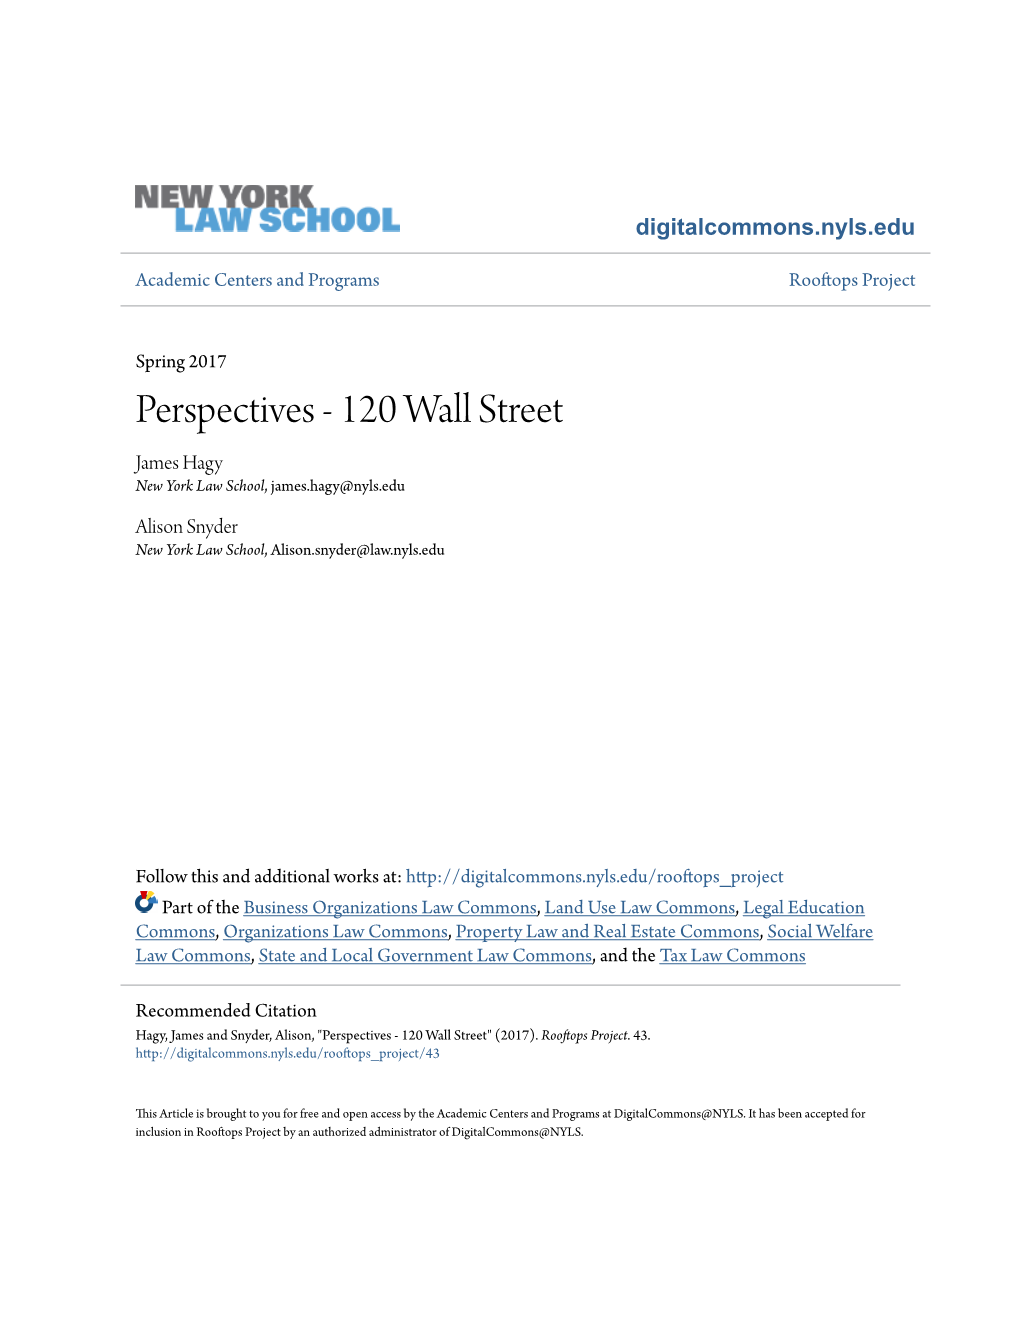 120 Wall Street James Hagy New York Law School, James.Hagy@Nyls.Edu